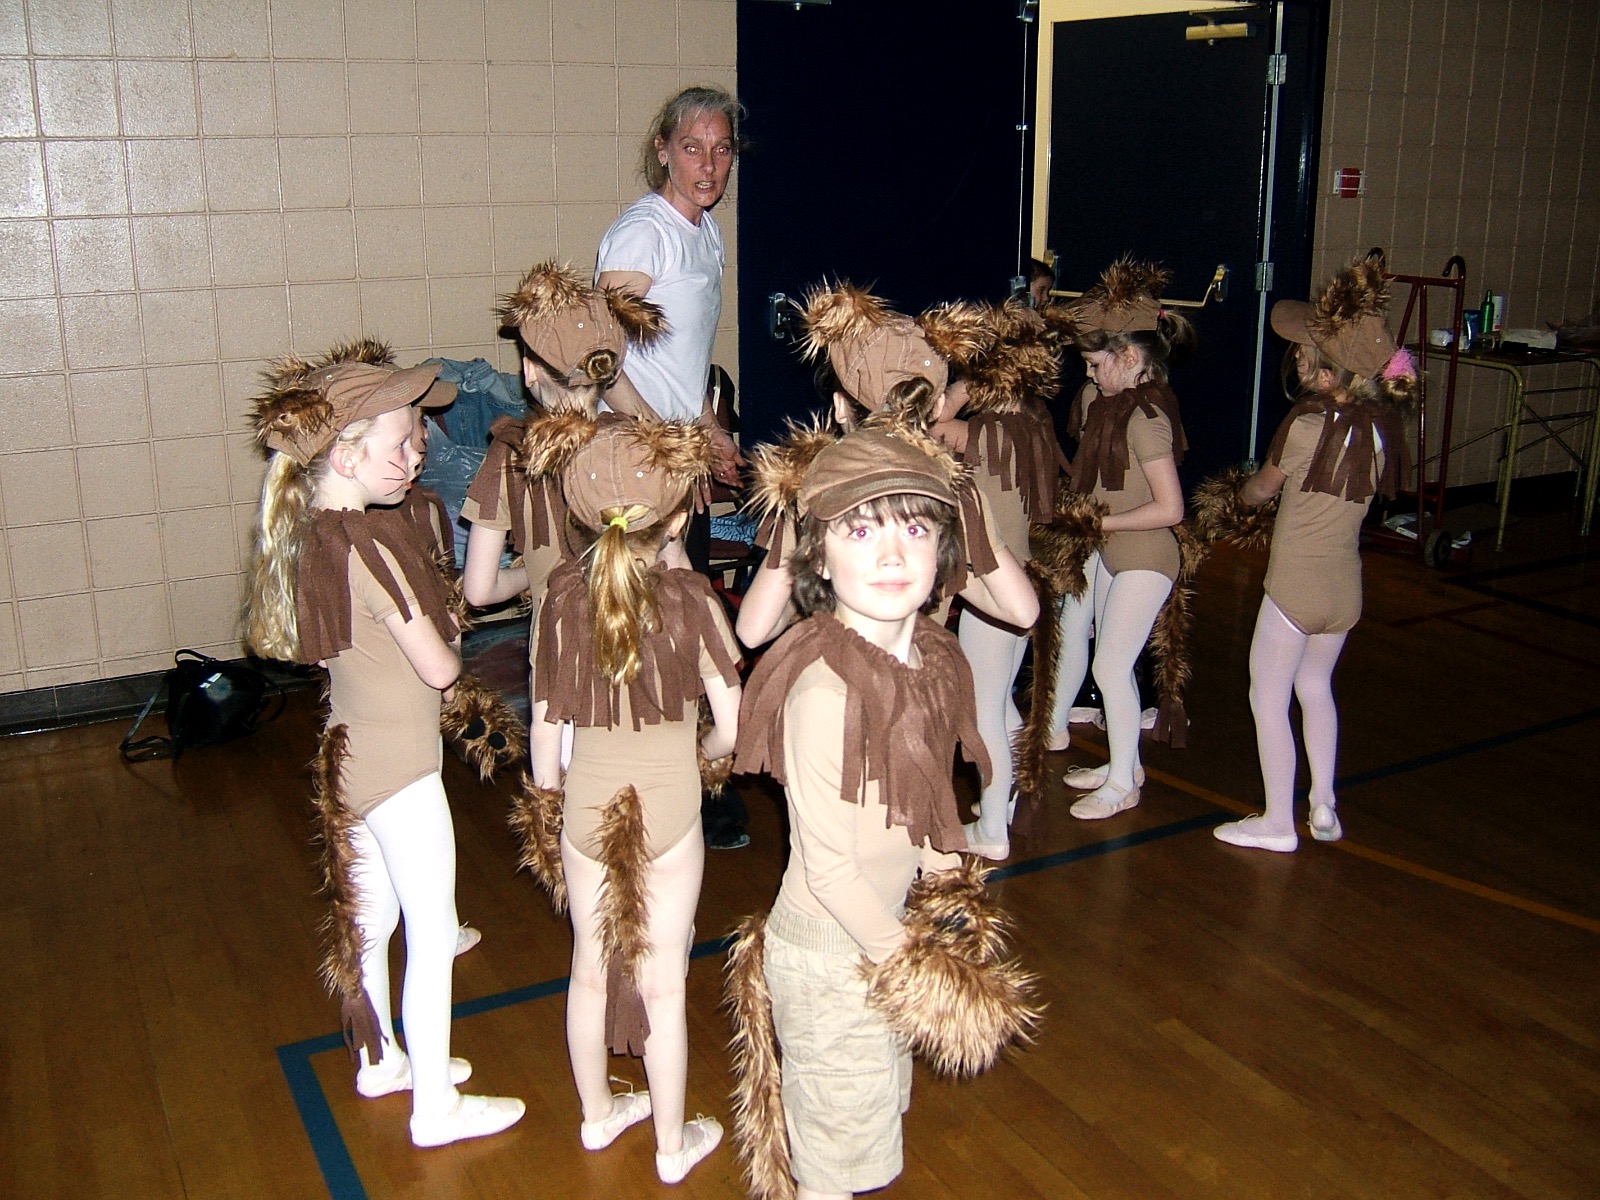 4-5 year old kids dressed as lion ballerinas